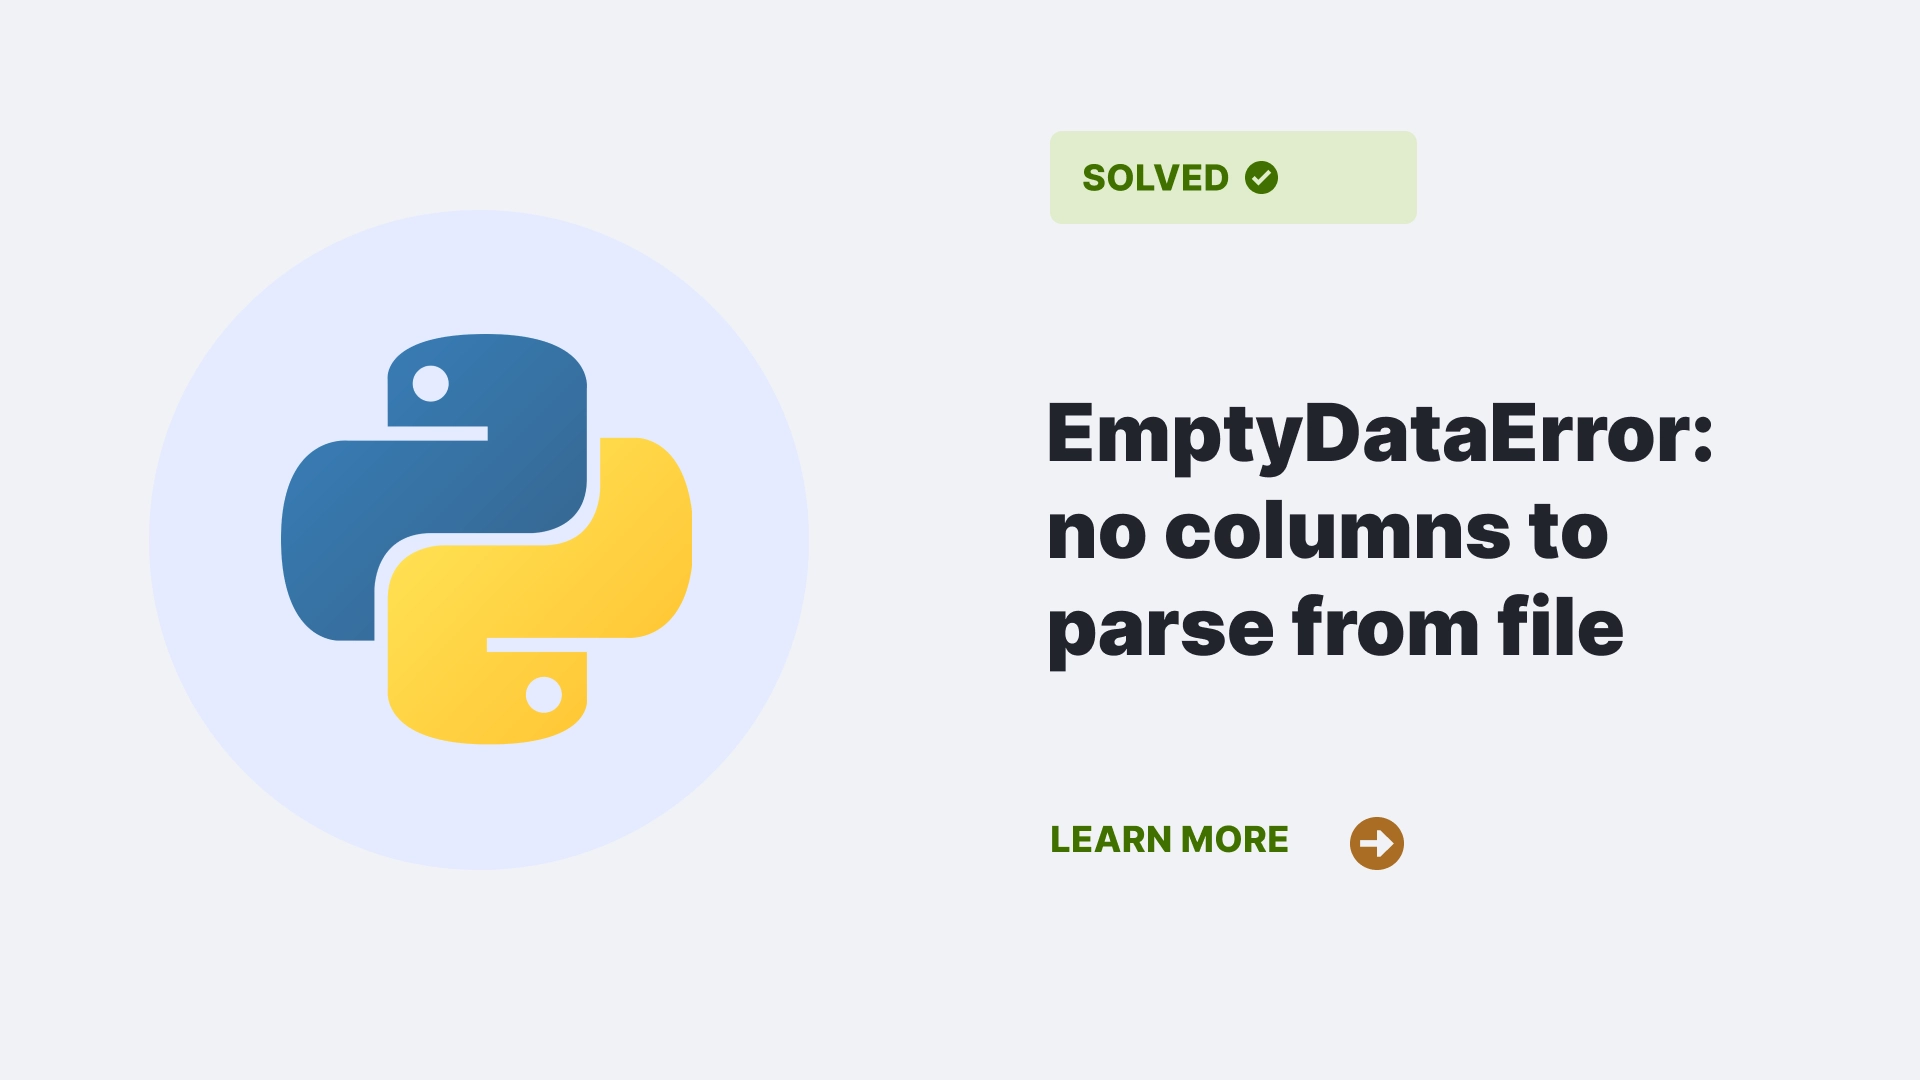 EmptyDataError: no columns to parse from file